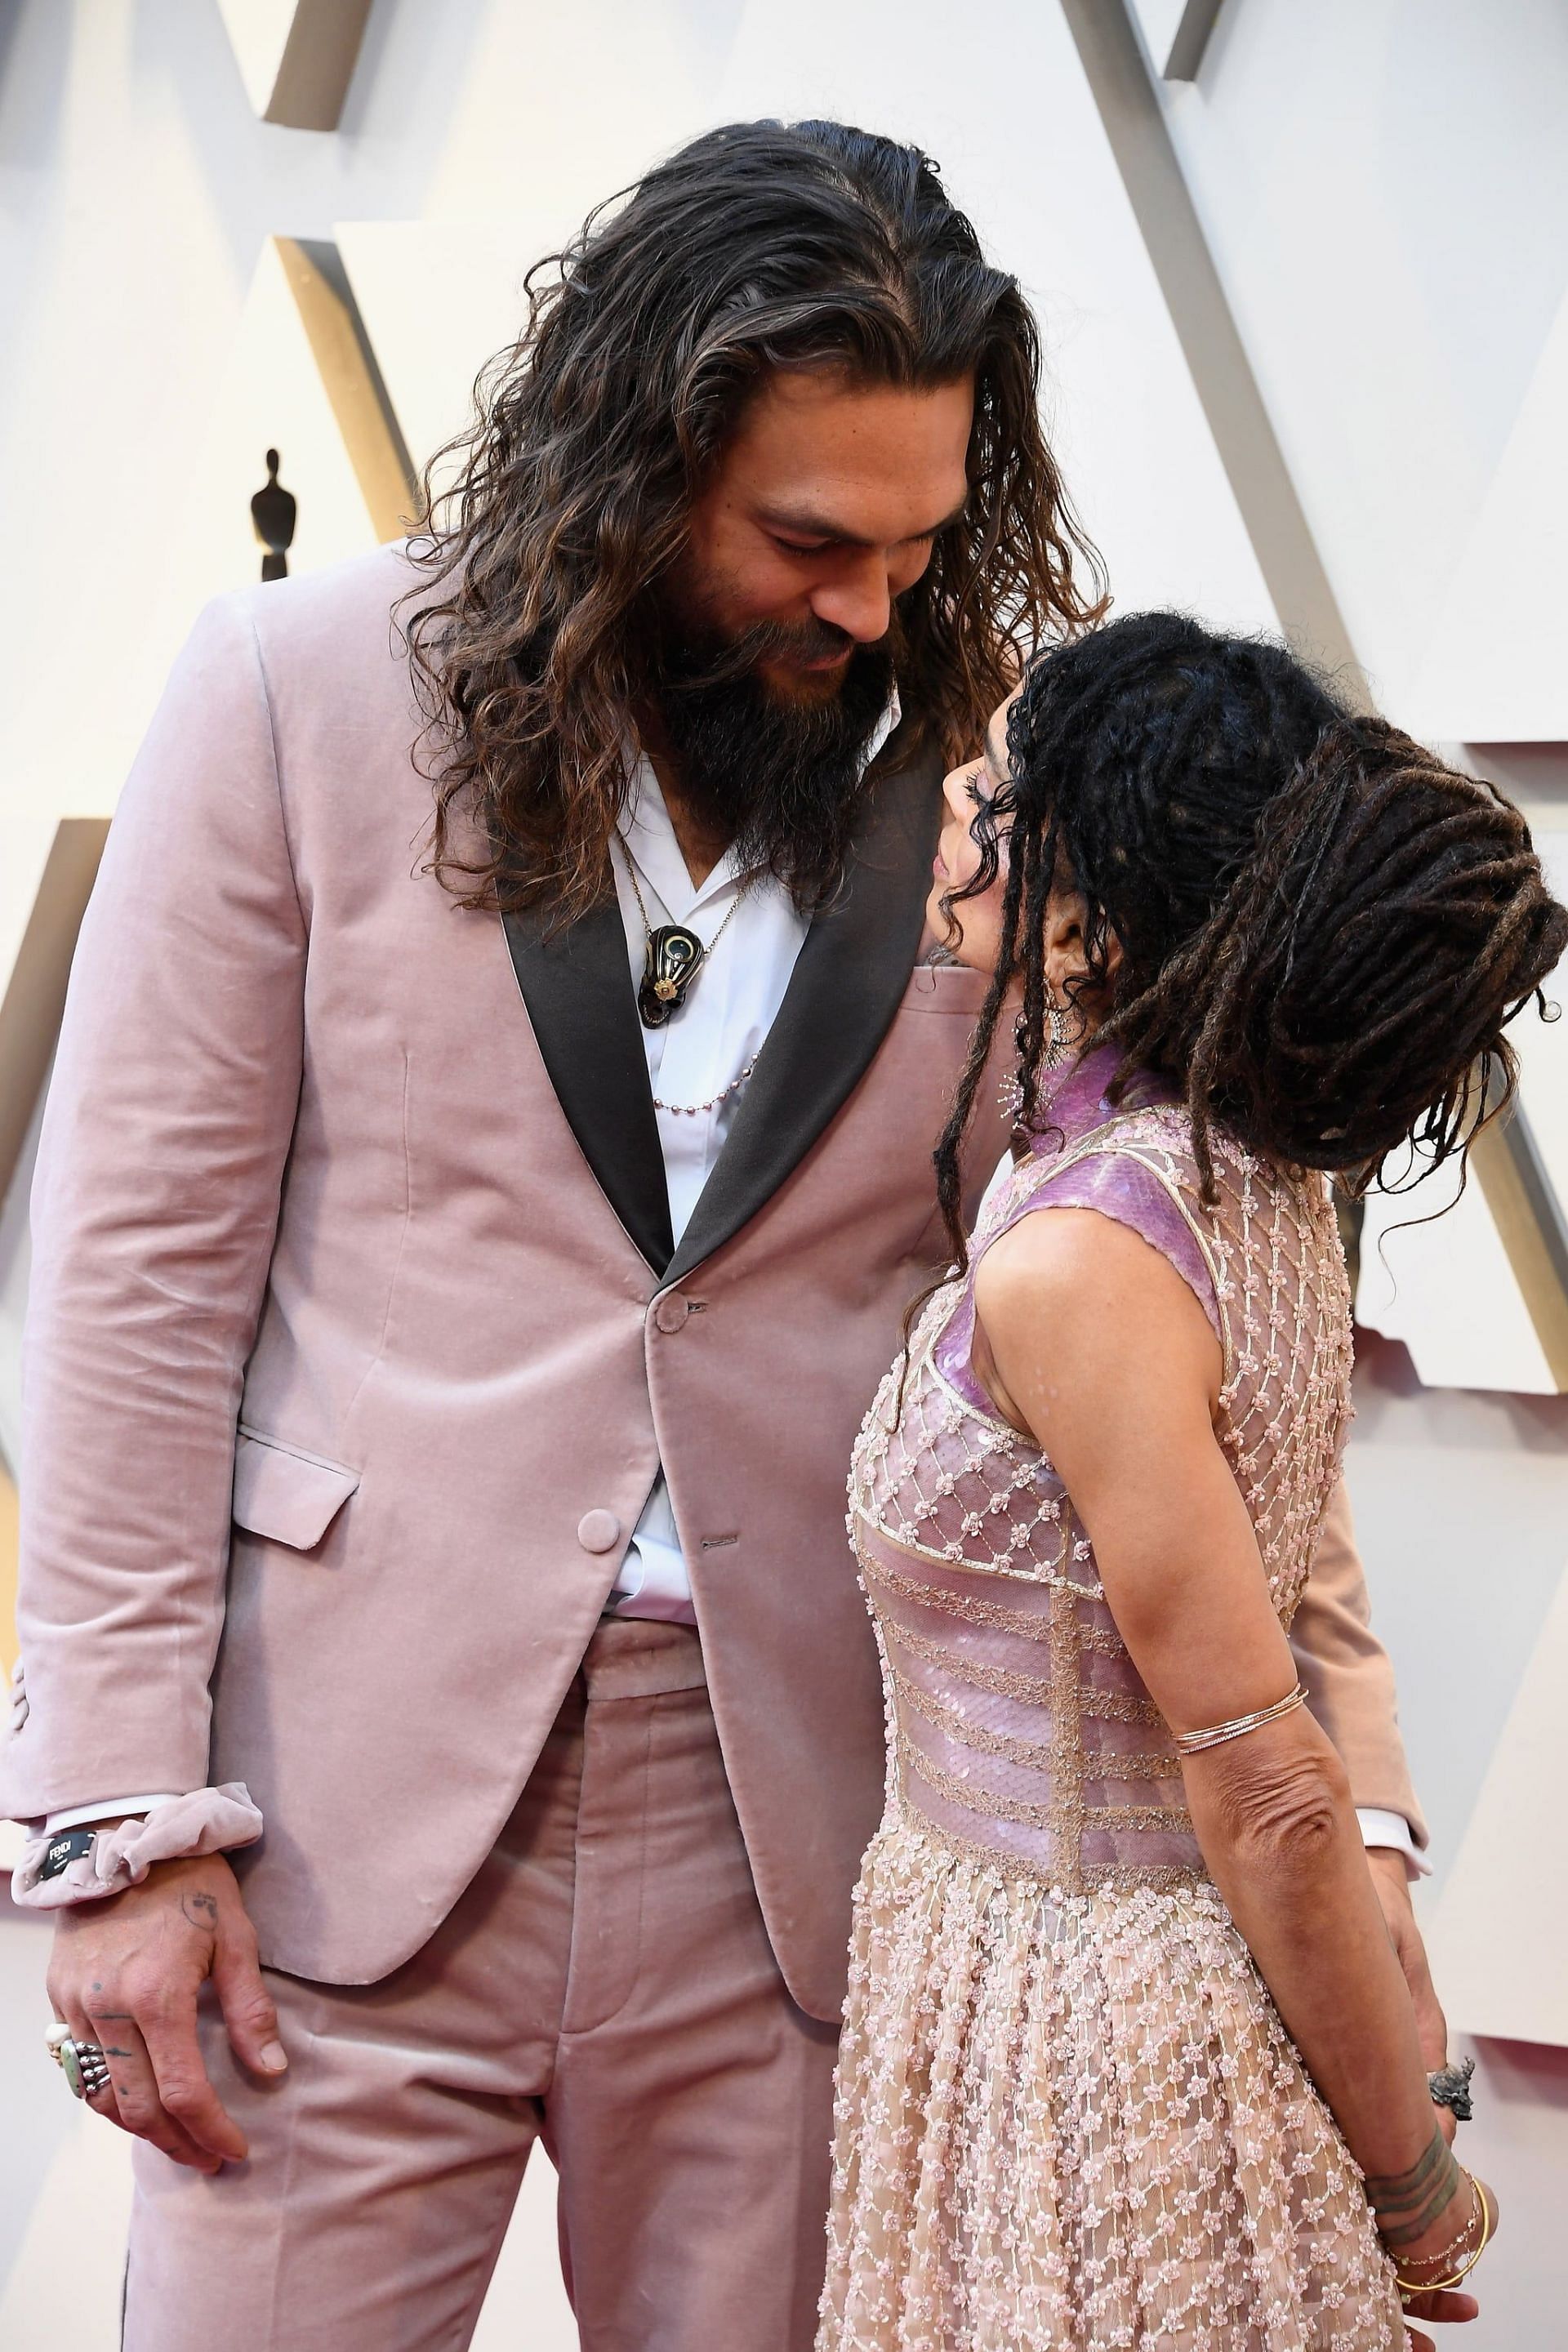 Jason Momoa and his wife on the red carpet. Oscars, 2019 (Image via PopSugar)